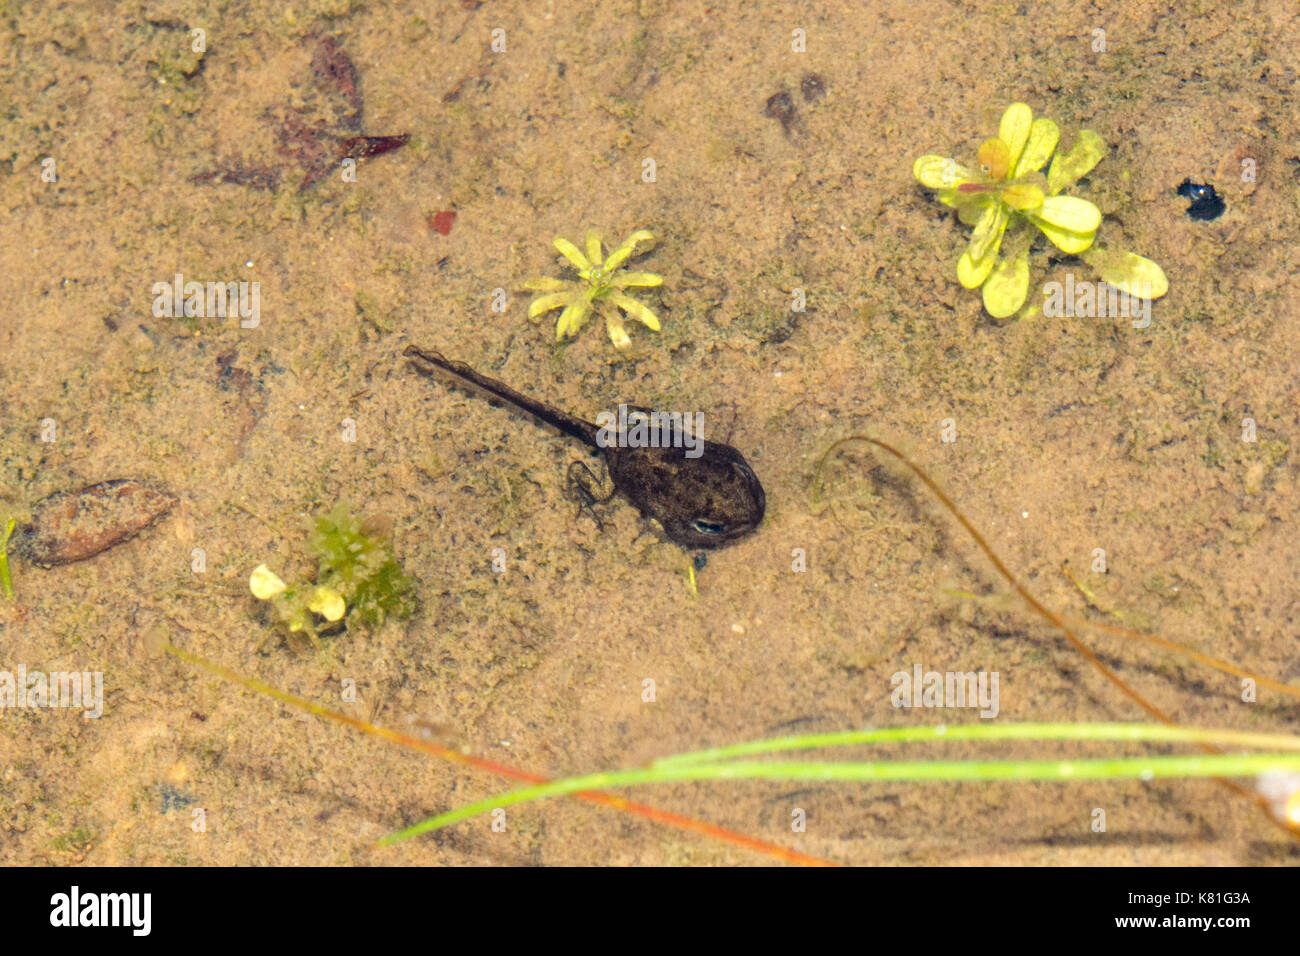 Natterjack toad (Epidalea calamita) tadpole showing hind limb development Stock Photo